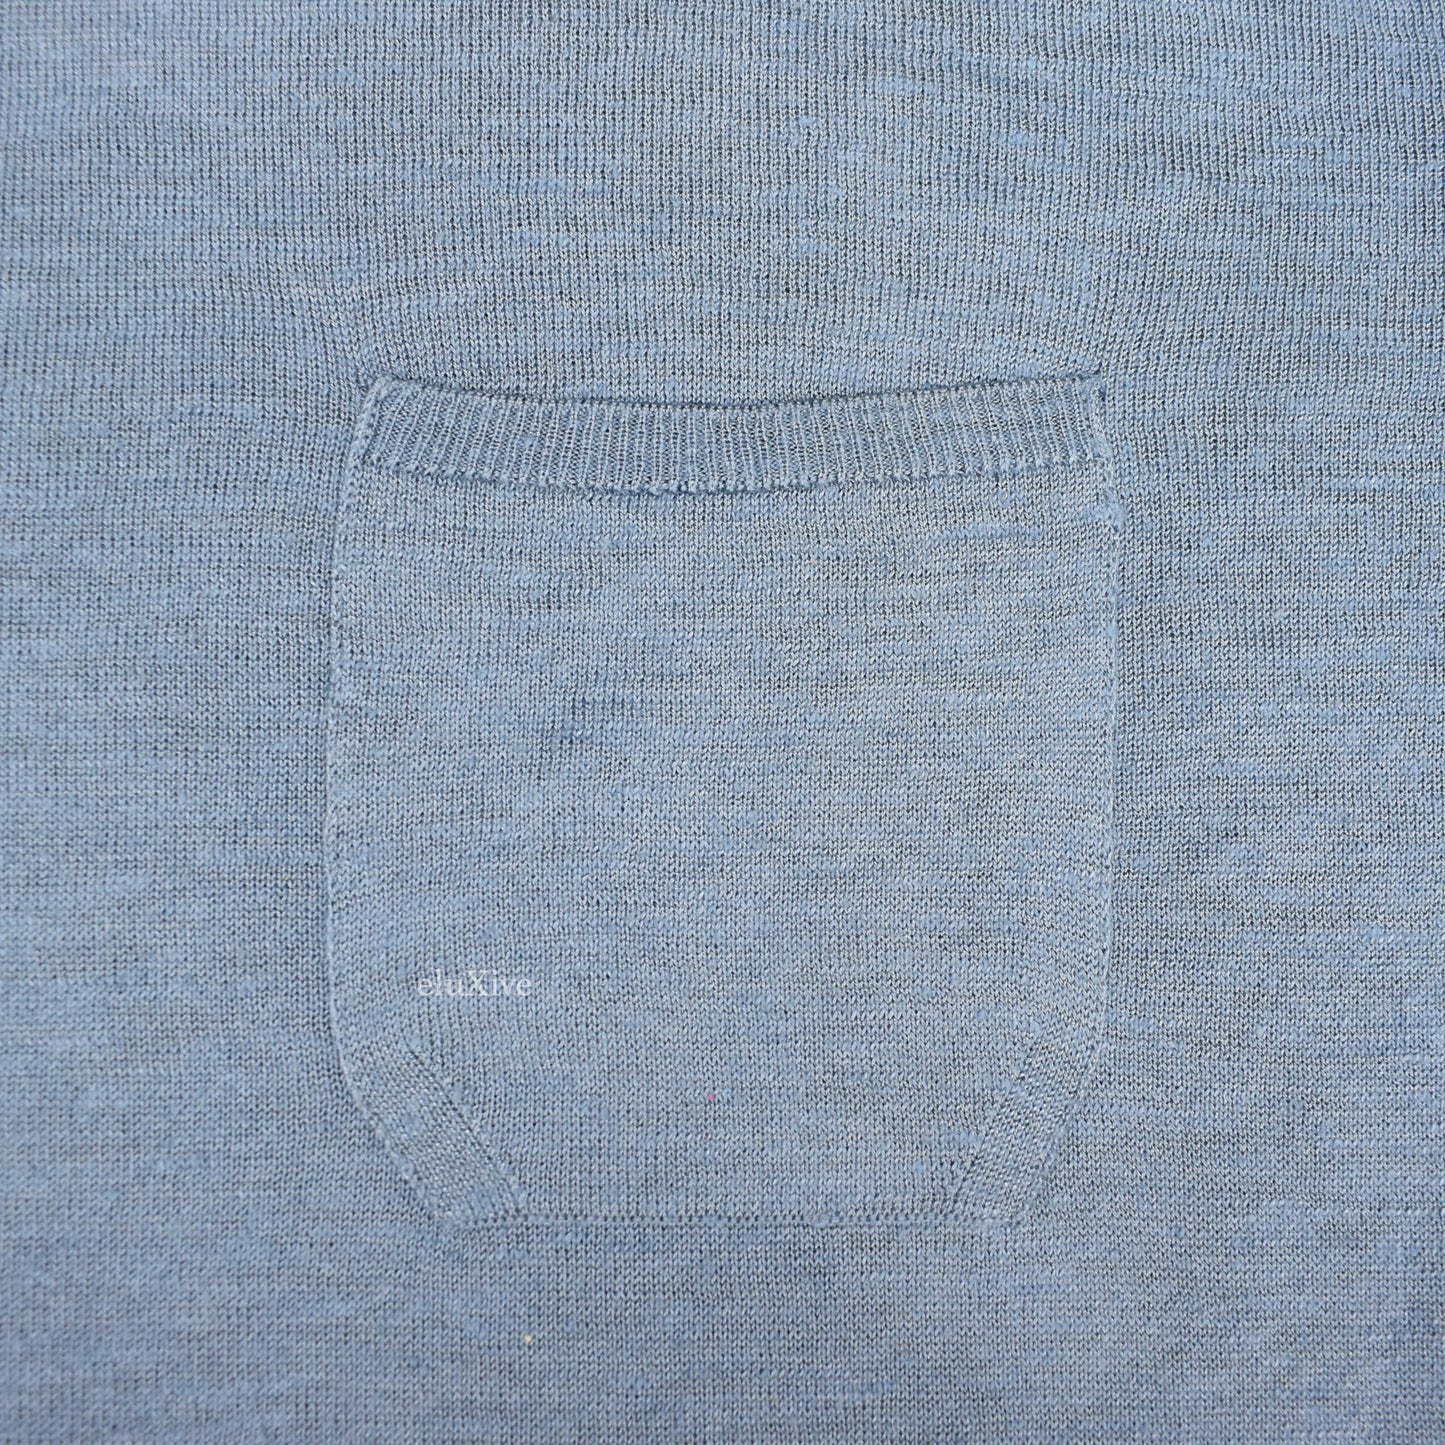 Ermenegildo Zegna - Slate Blue Silk / Linen Crewneck Sweater